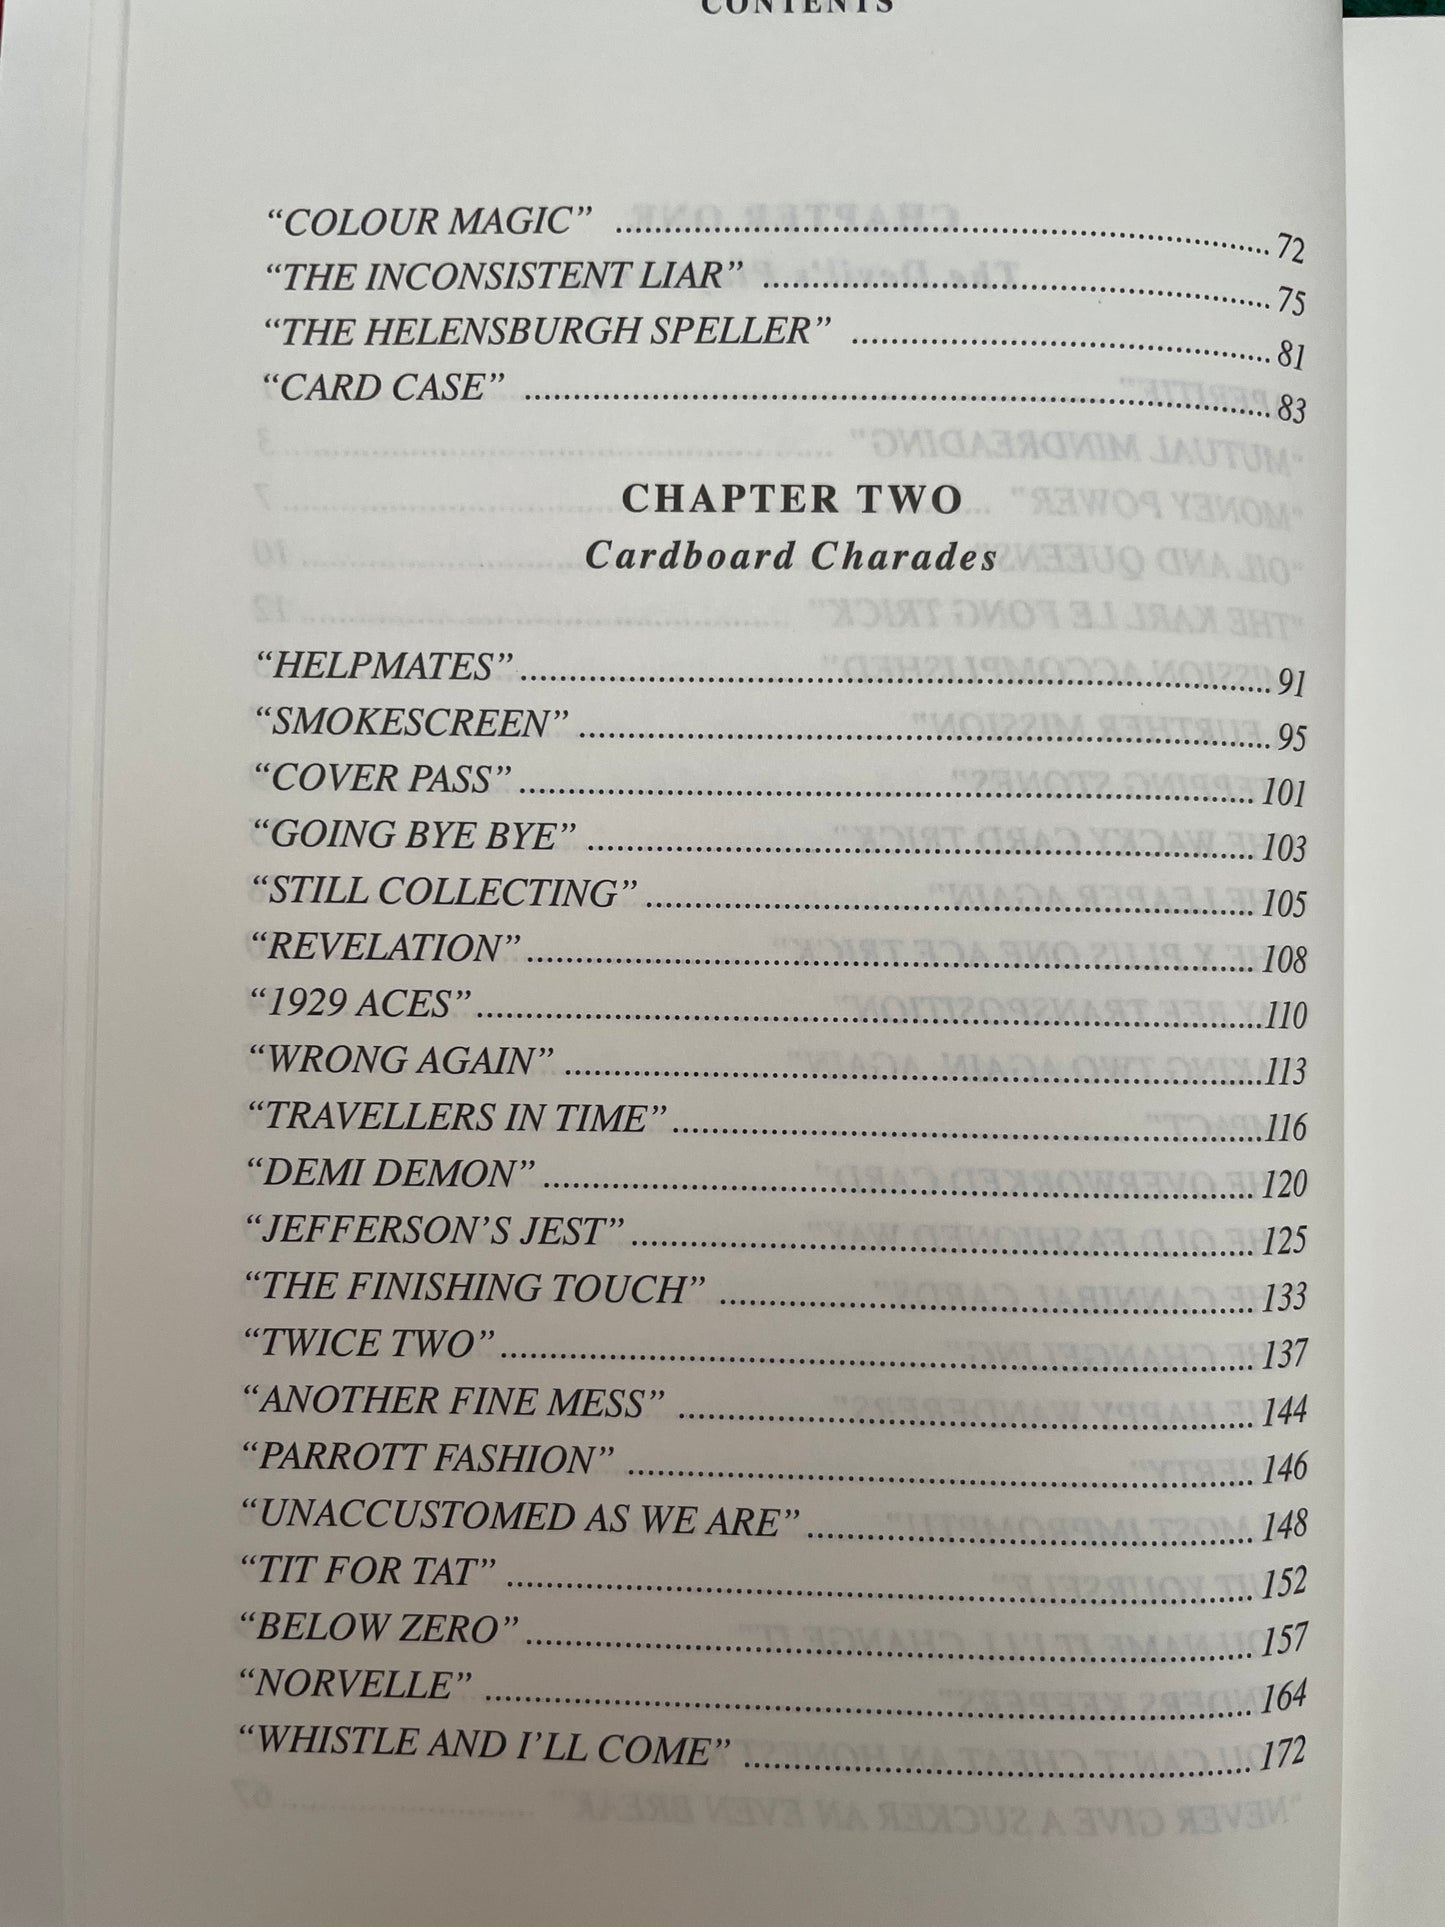 The Complete Walton Vol.1 - Roy Walton (2012 ed.)